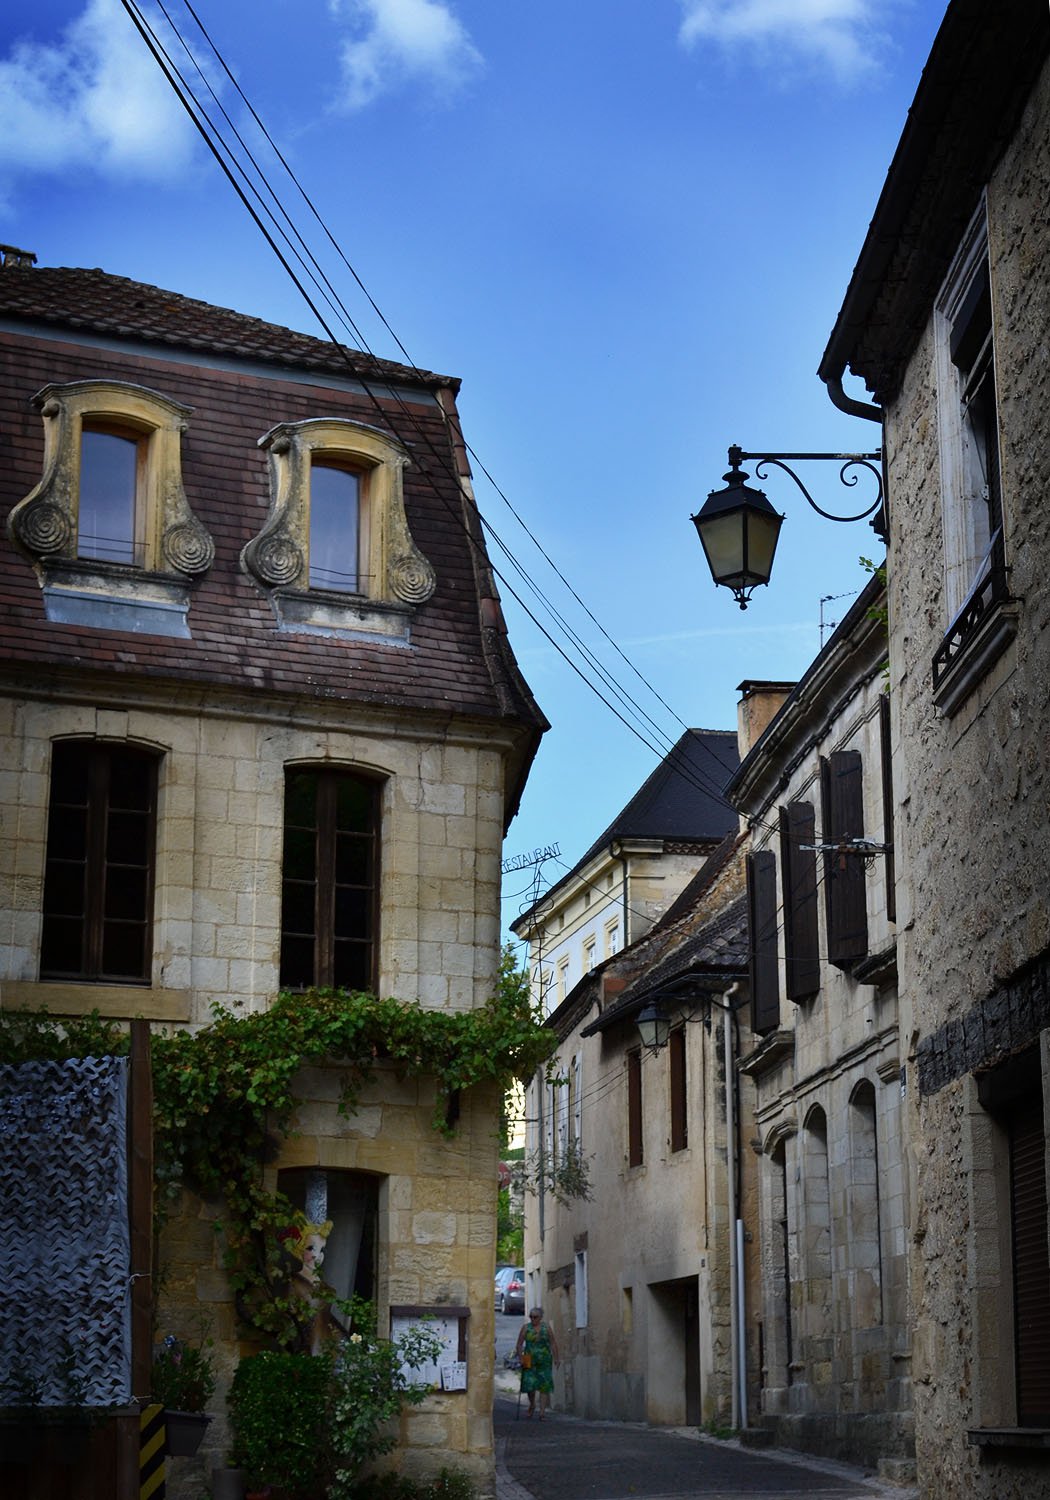 Charming backstreets in Le Bugue, Dordogne